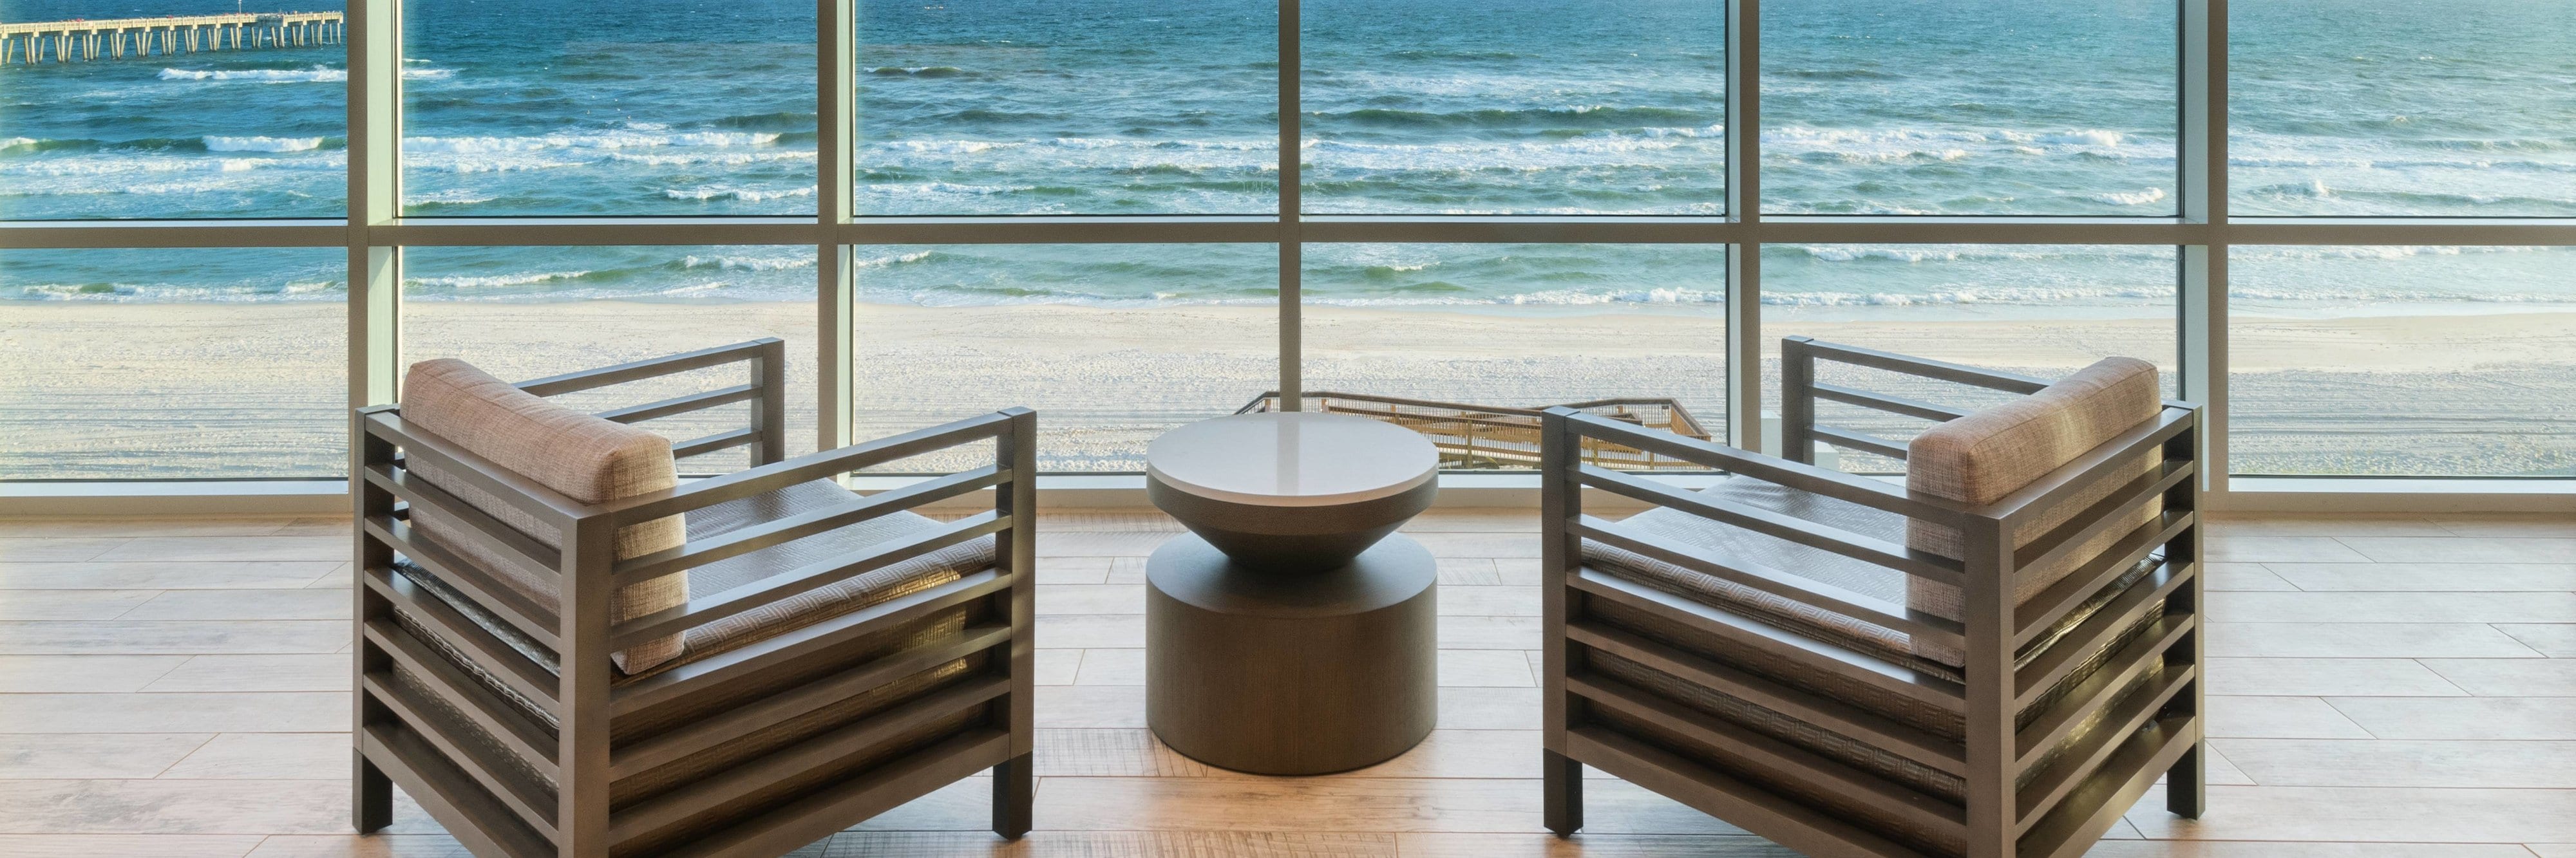 Lobby seating near window next to beach